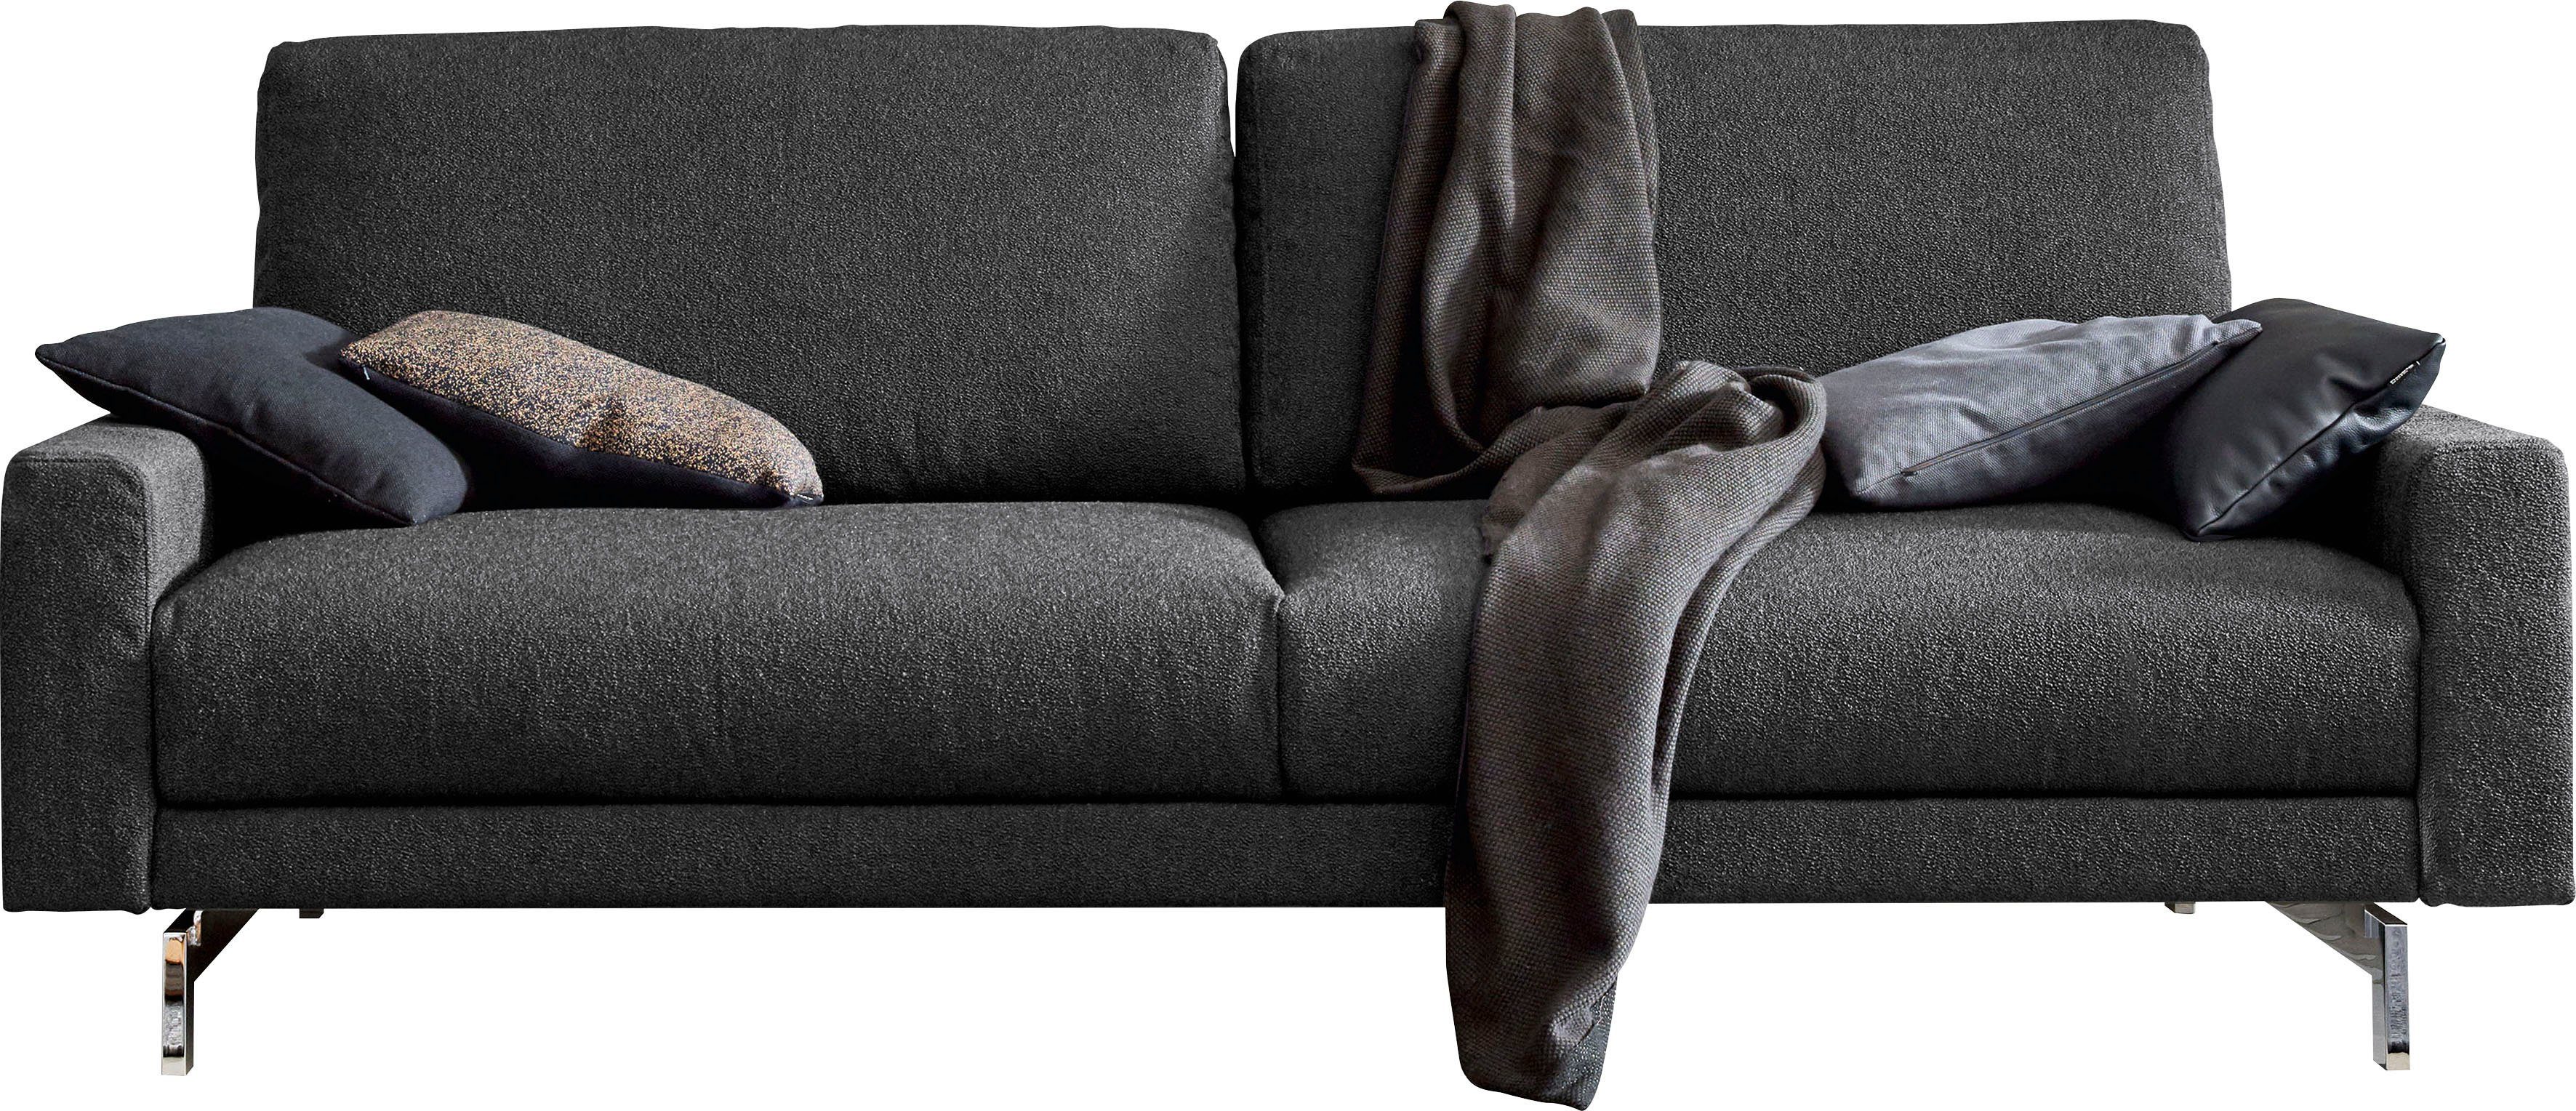 hülsta Armlehne cm niedrig, hs.450, 2-Sitzer Fuß Breite 164 sofa glänzend, chromfarben